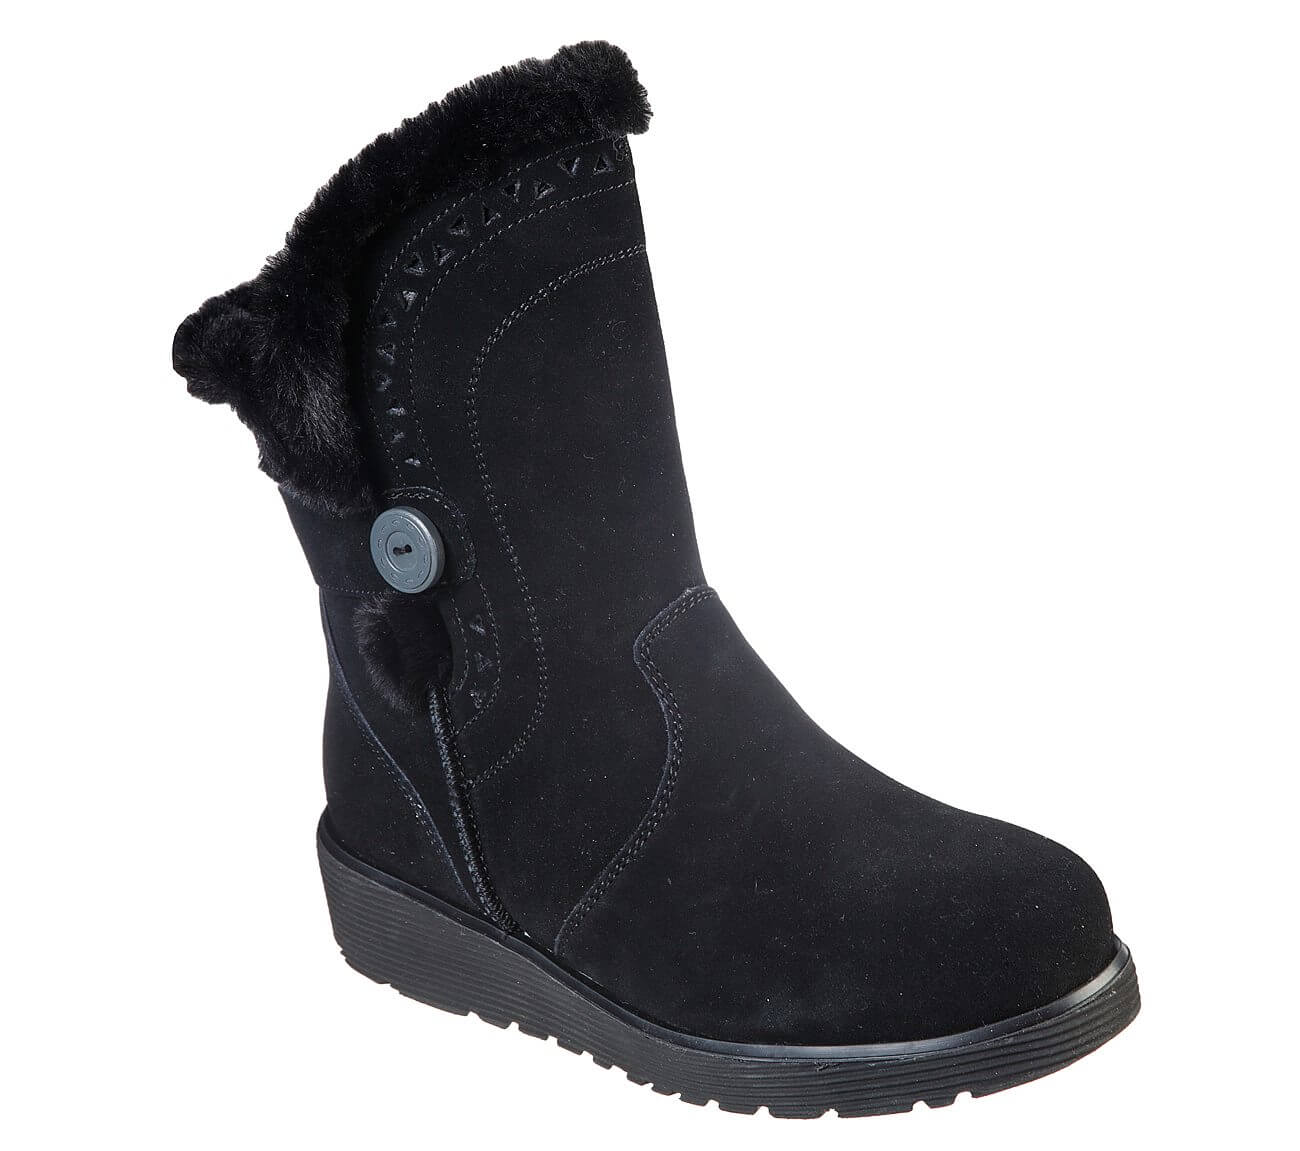 Fur Lined Boots | Skecher Keepsakes 